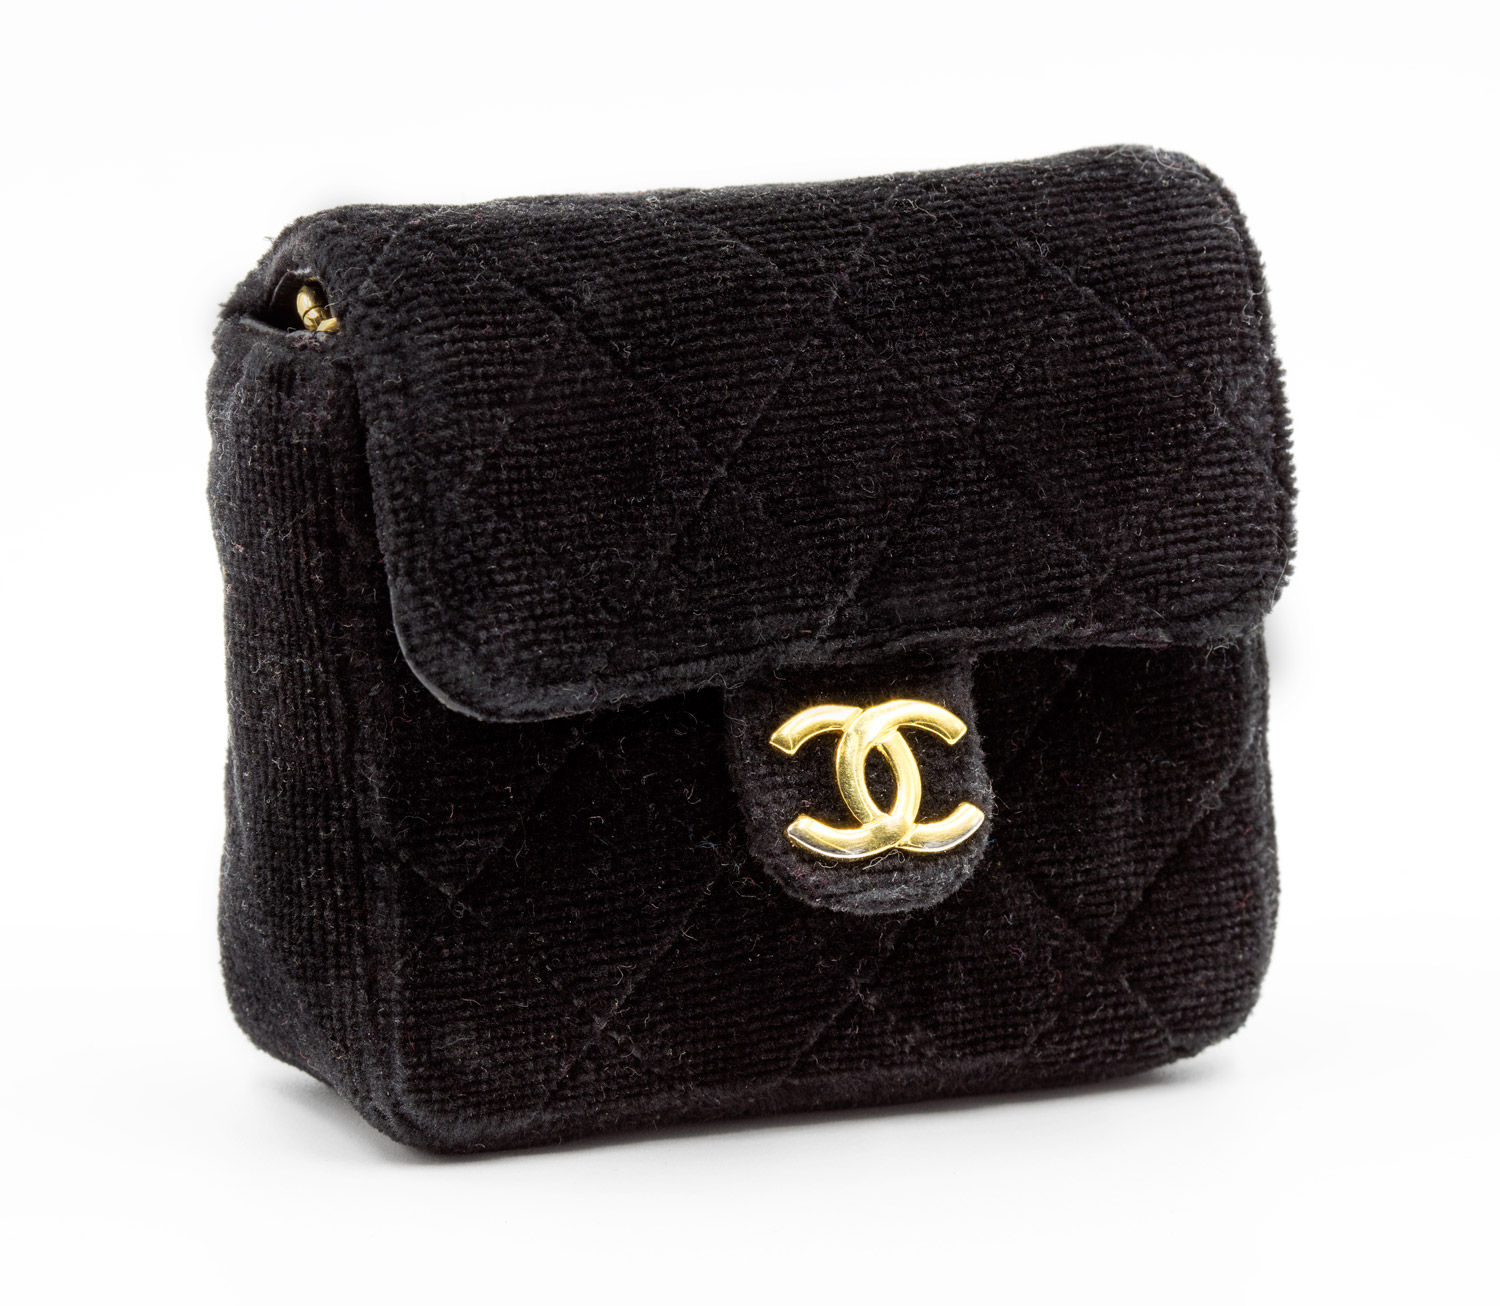 Mua Túi Đeo Vai Chanel Small Boy Lambskin Bag in Pearly Black with Gold  Hardware Màu Đen  Chanel  Mua tại Vua Hàng Hiệu h062669